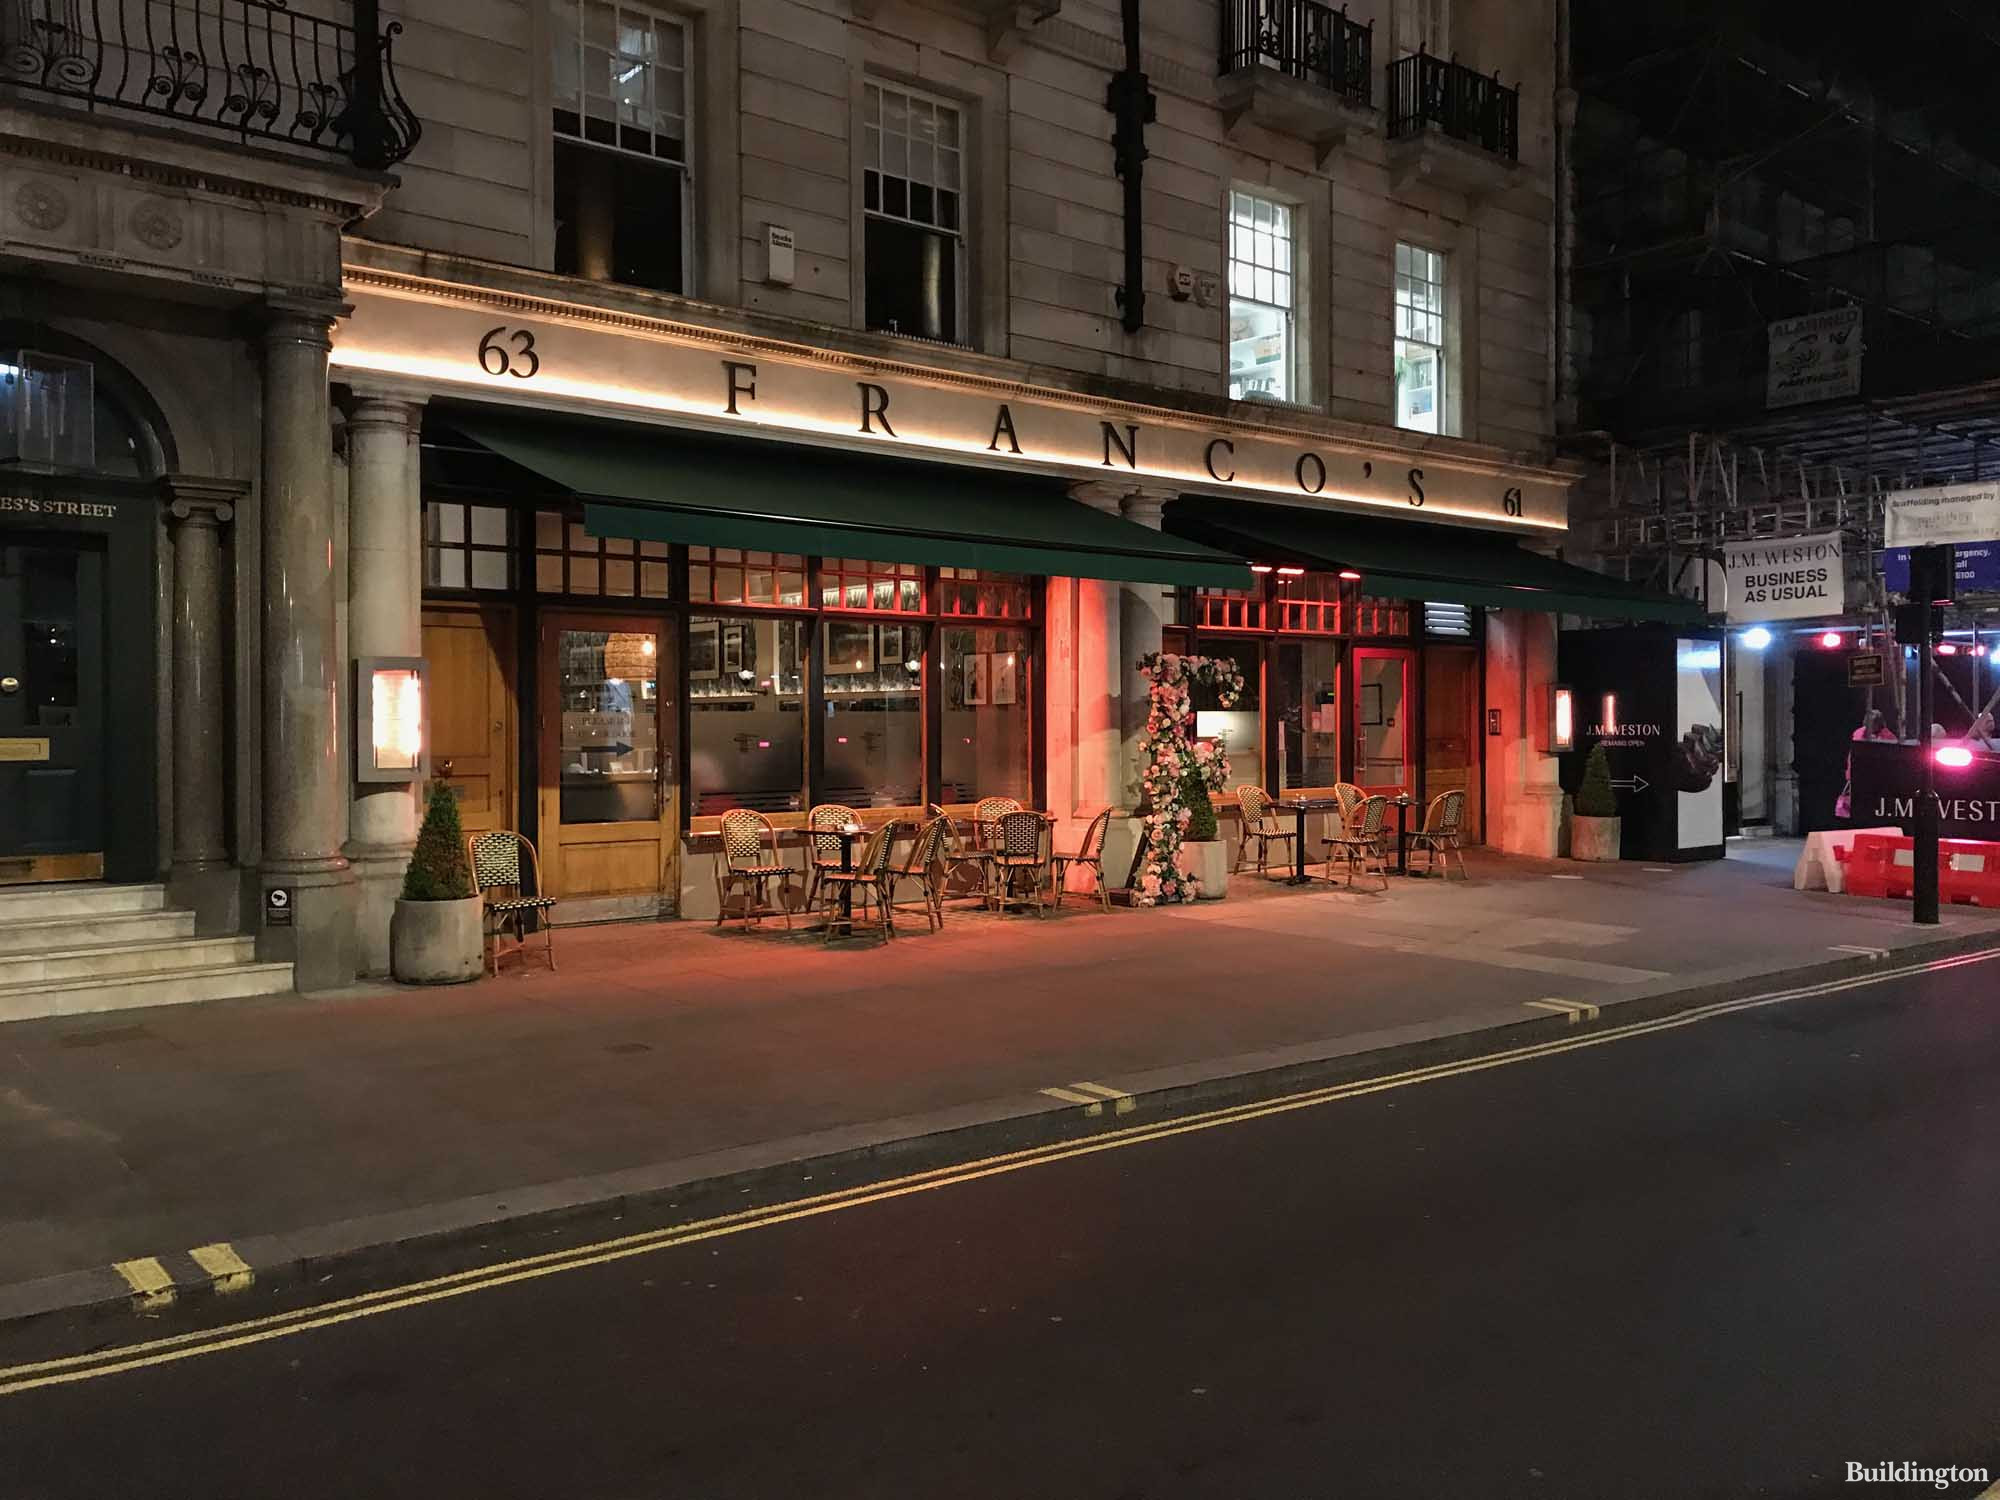 Franco's at night att 61-63 Jermyn Street in St James's, London SW1.